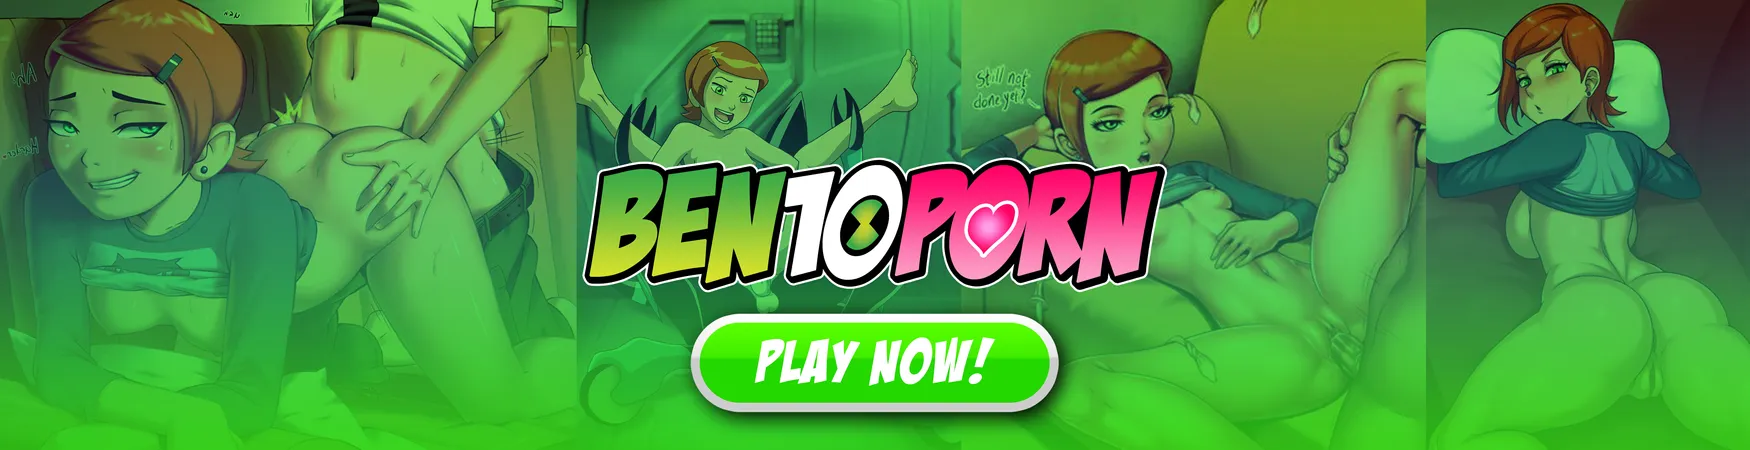 Free Ben 10 Cartoon Porn Games Online